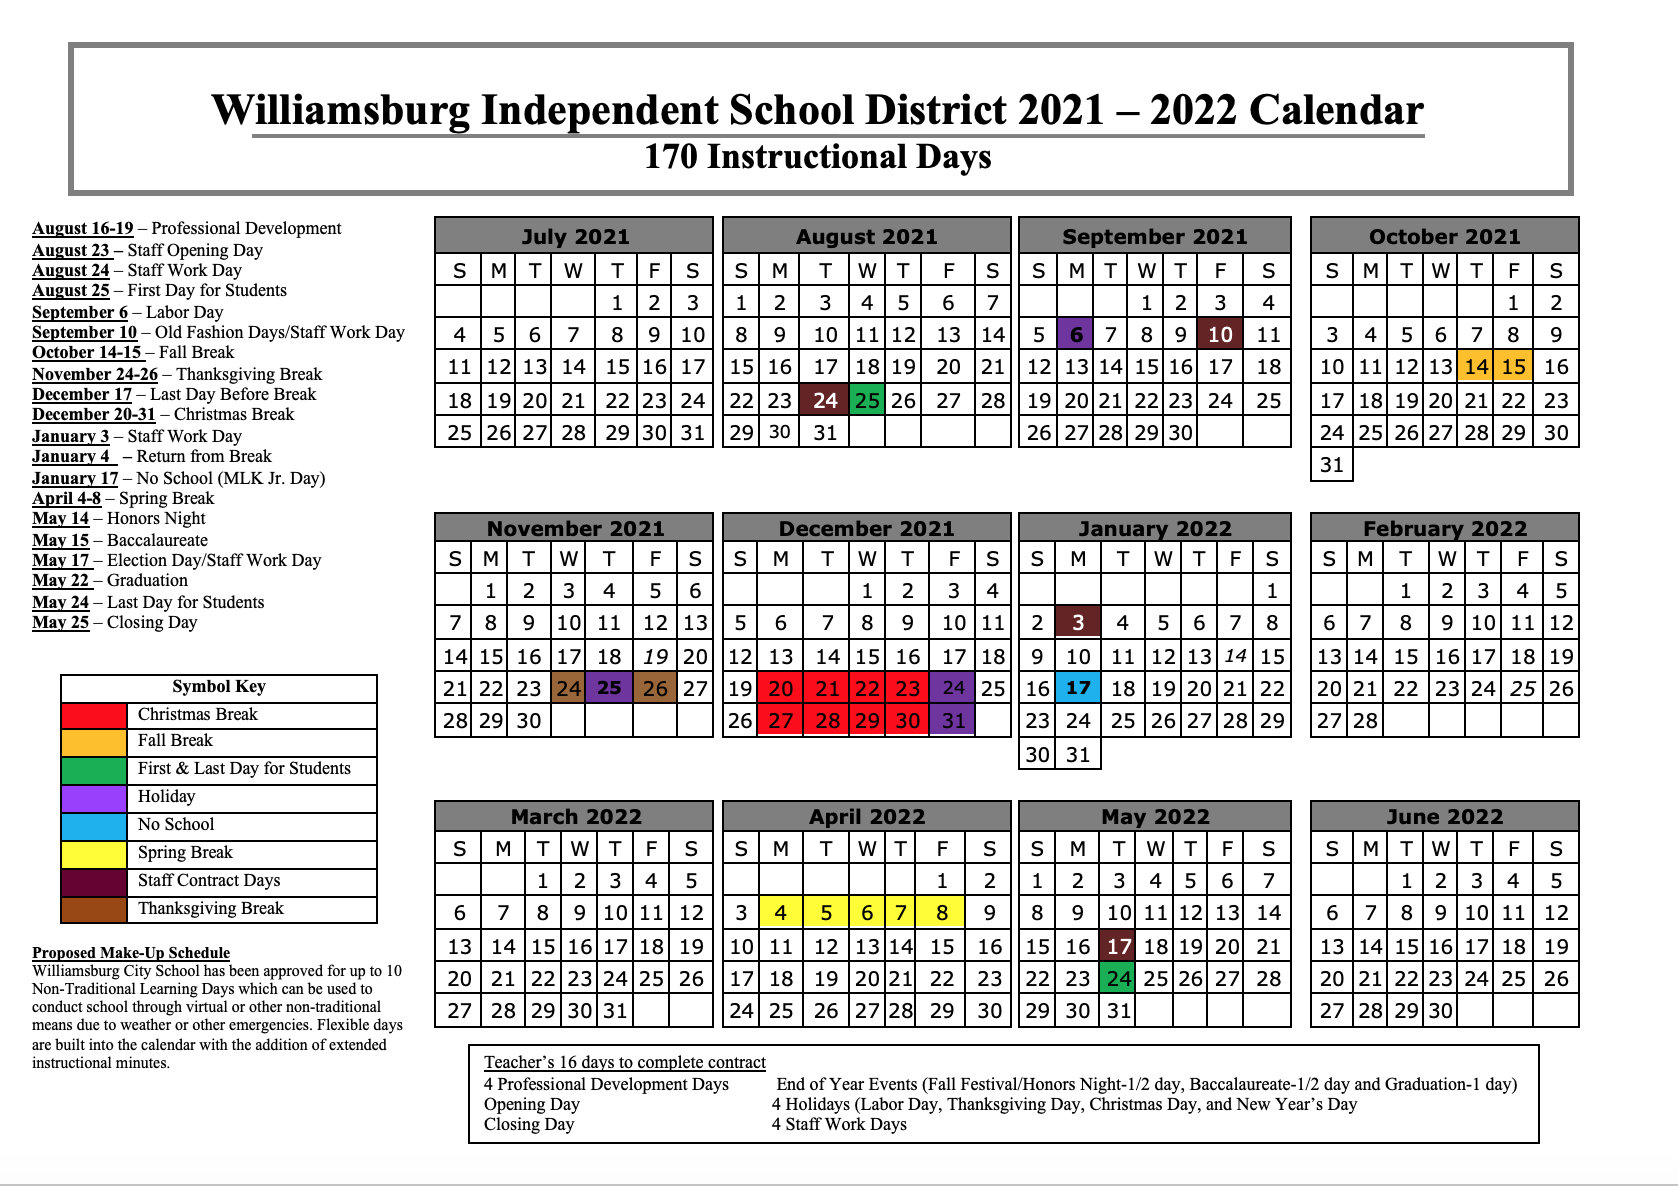 Williamsburg Independent Schools Calendar 2022.